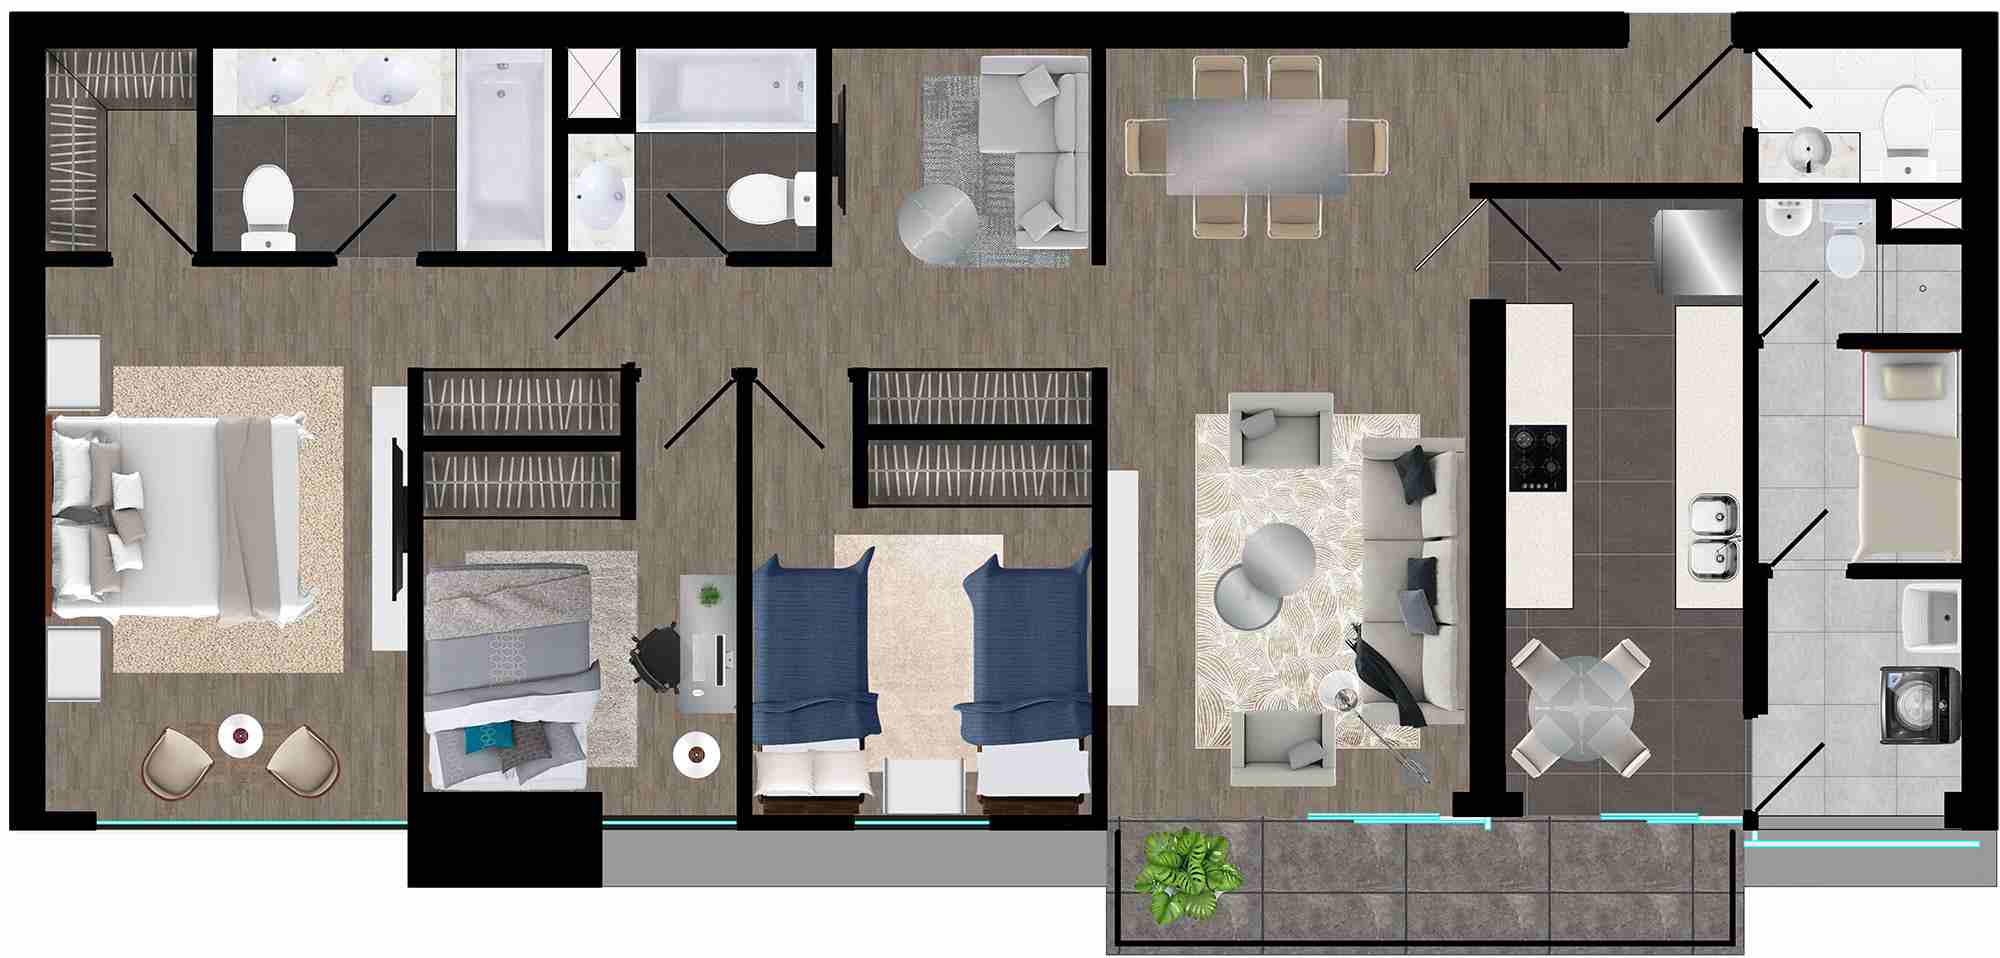 plano 3 dormitorios 129m2 muv arquimia 2